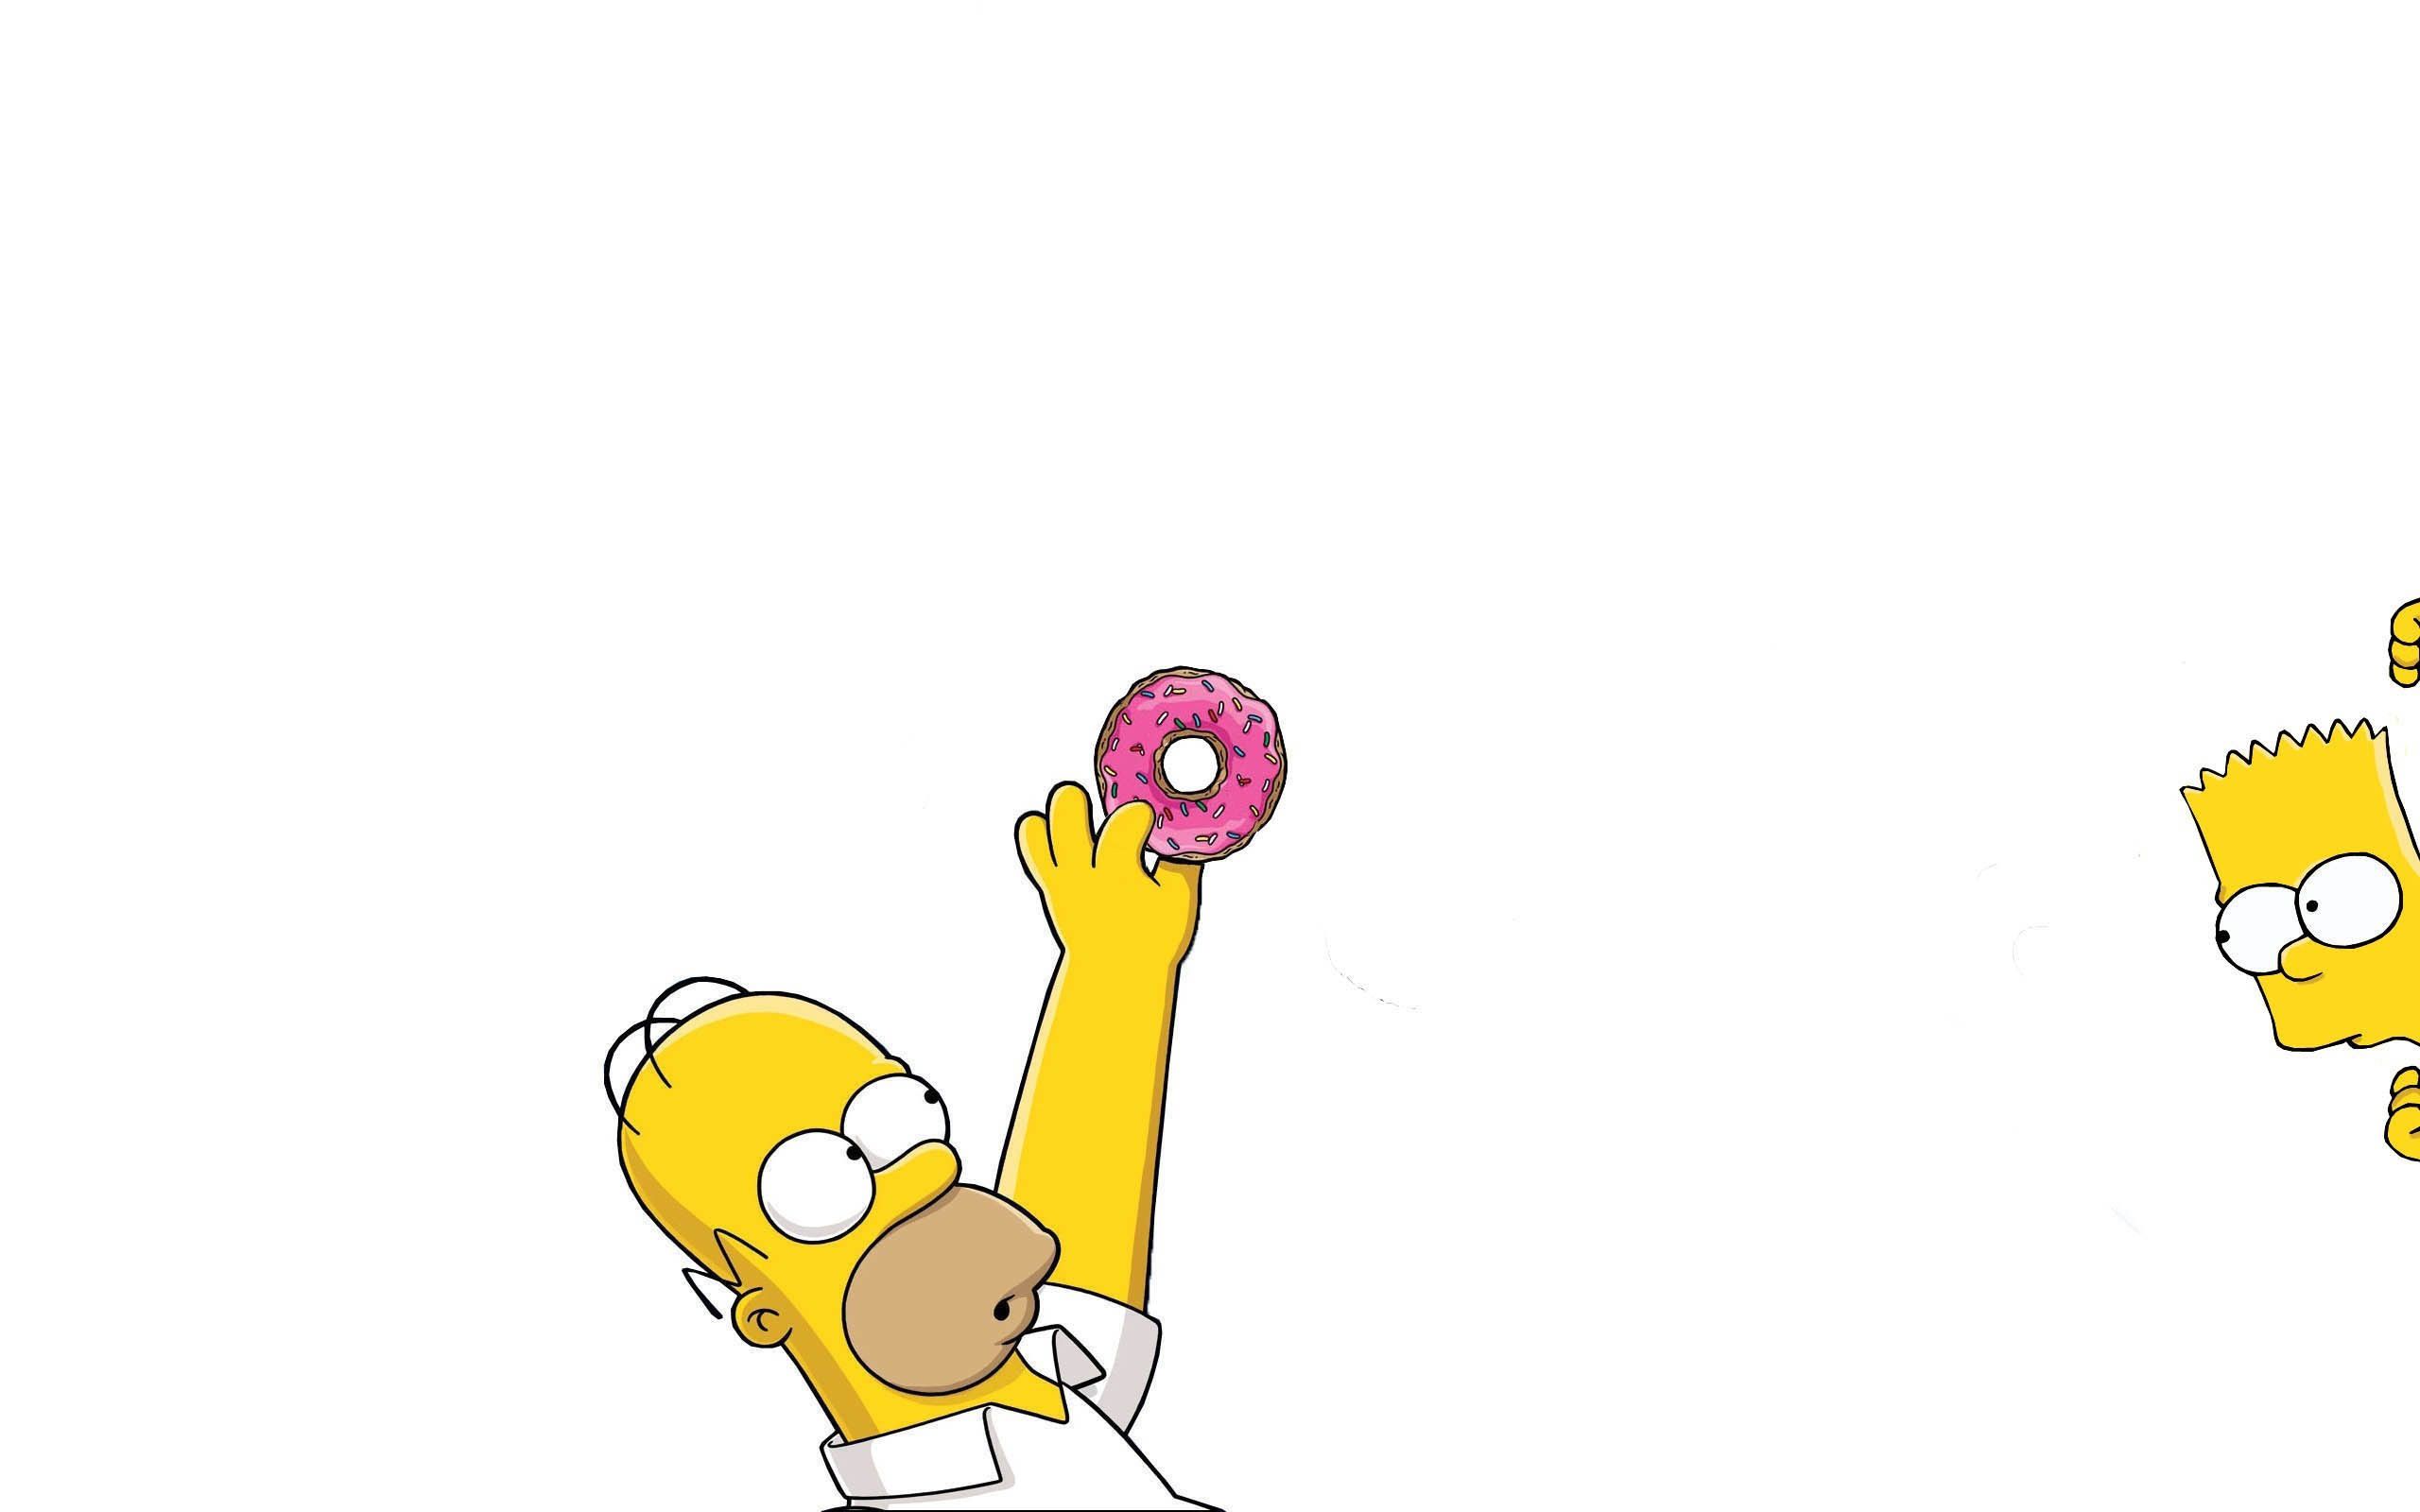 Aesthetic Simpsons Wallpapers Desktop Free Download 